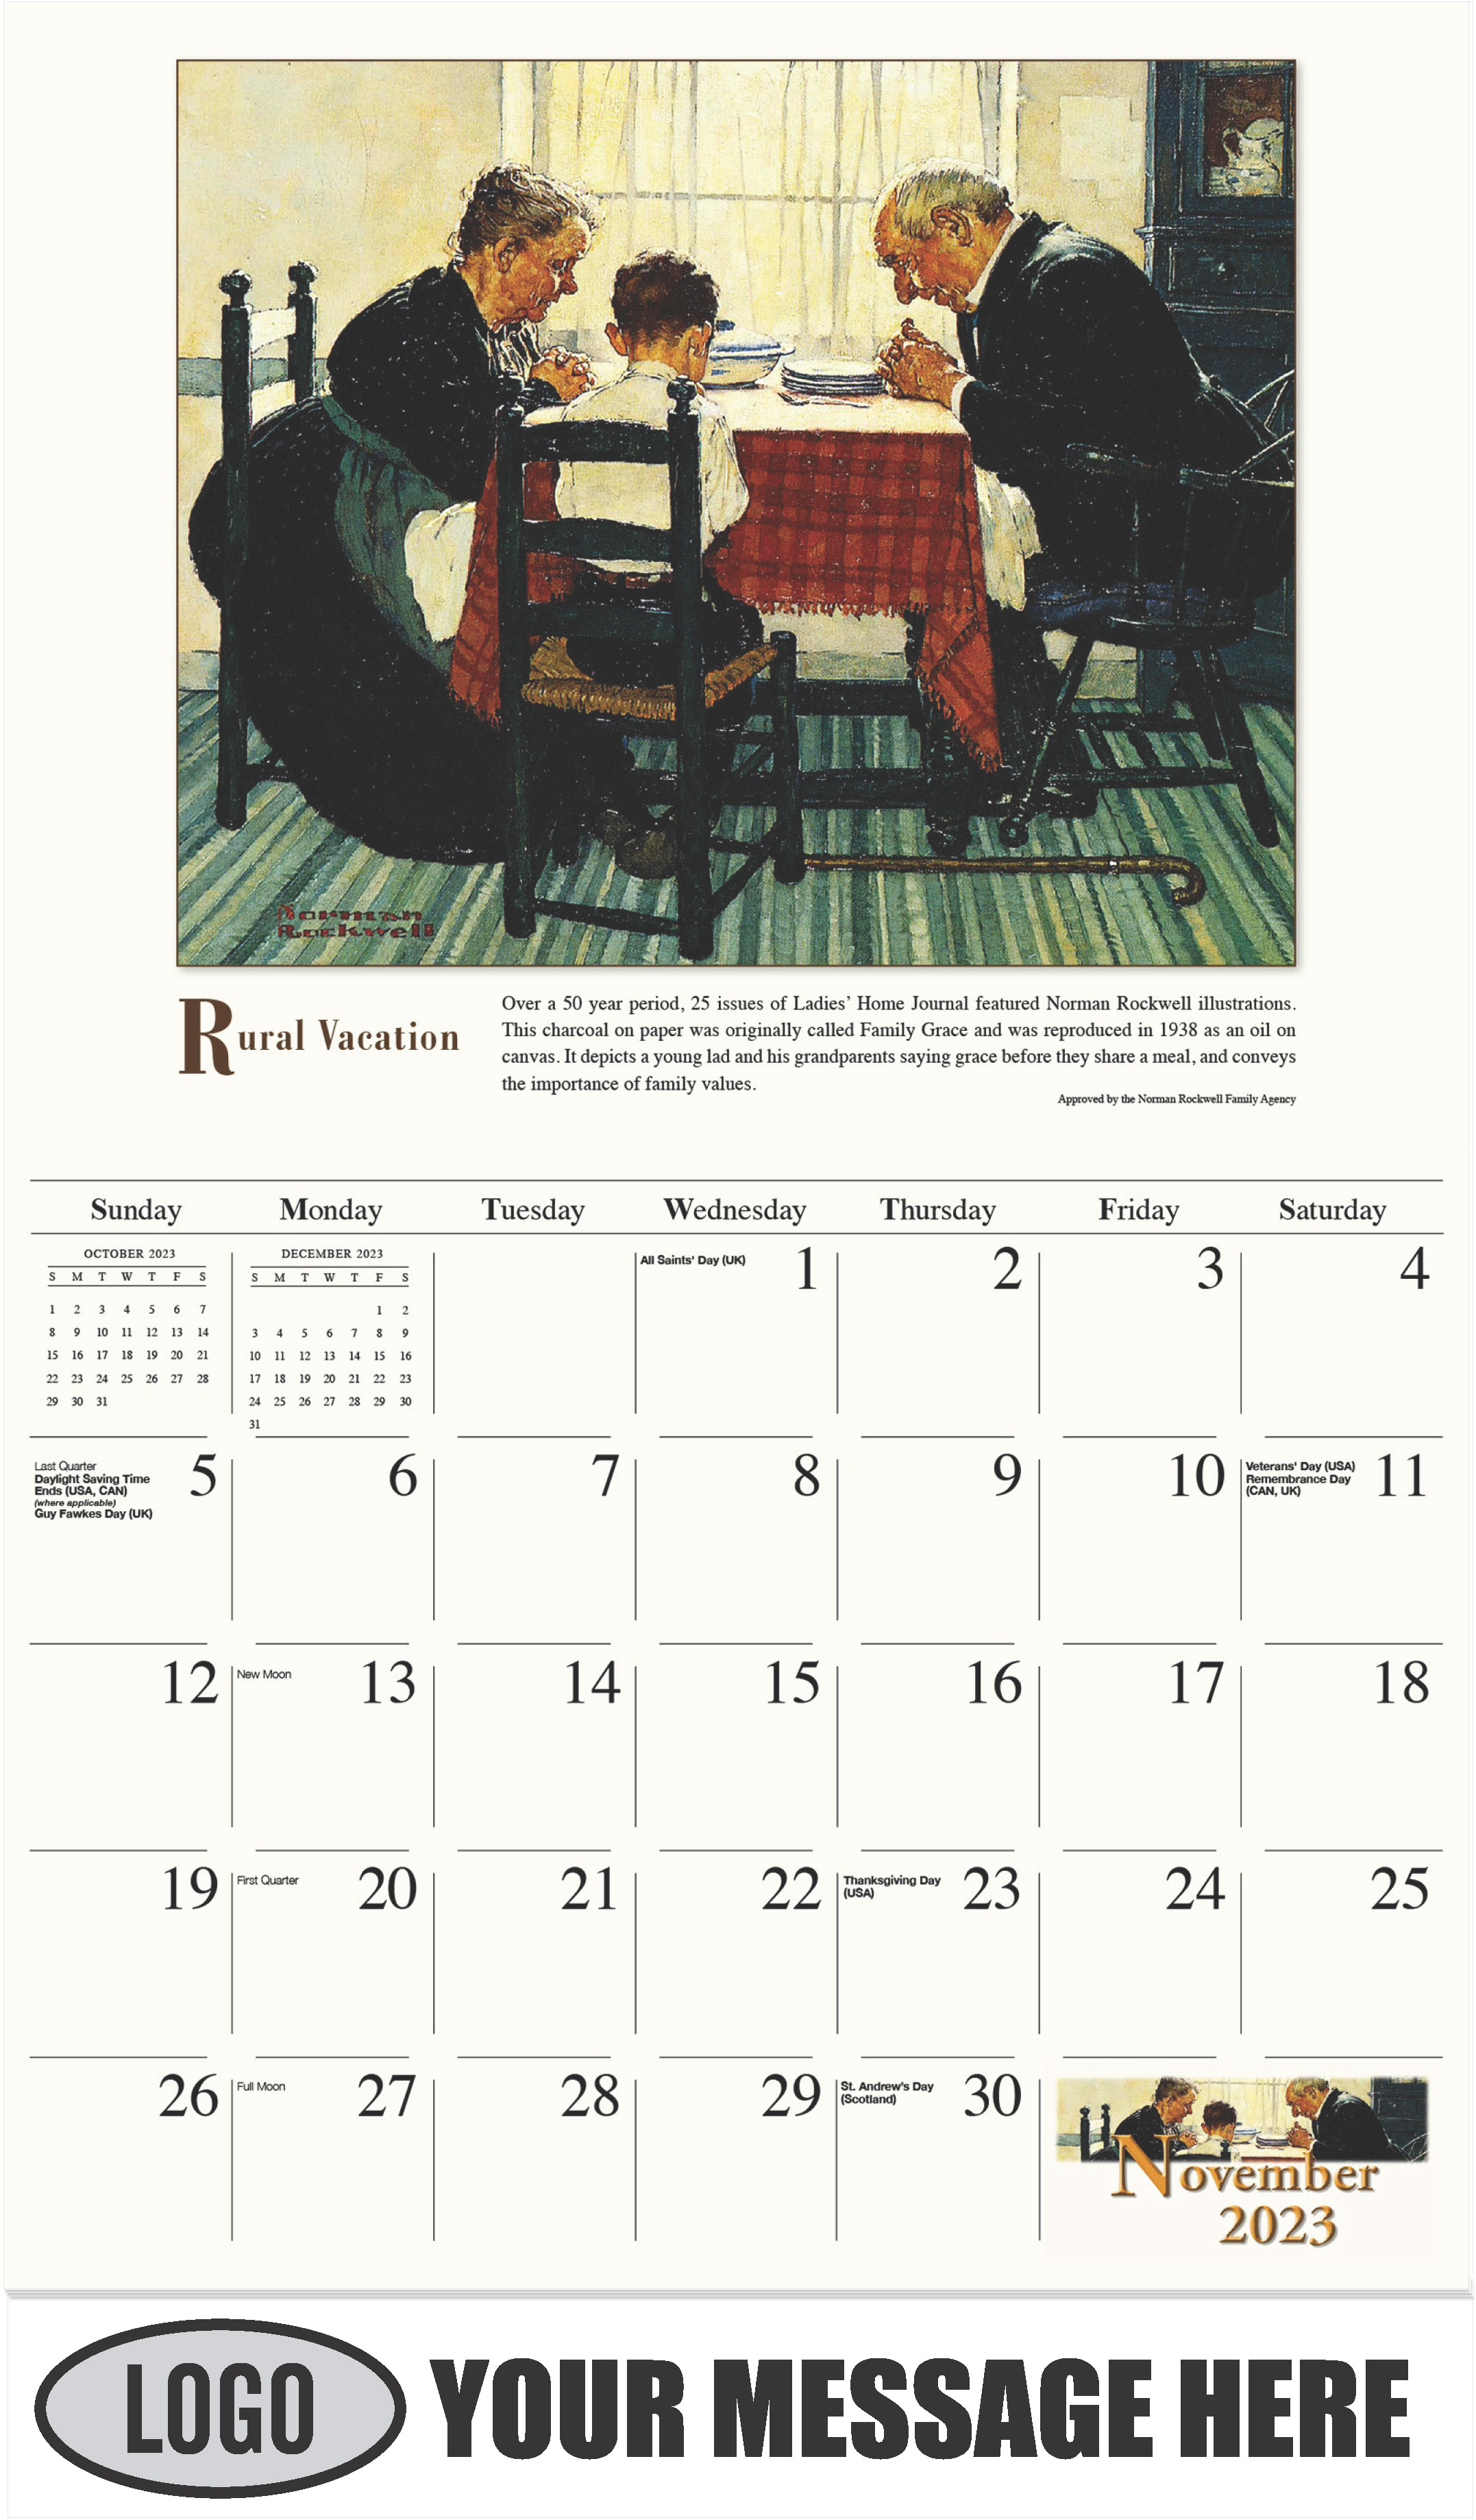 Rural Vacation - November - Norman Rockwell - Memorable Images 2023 Promotional Calendar